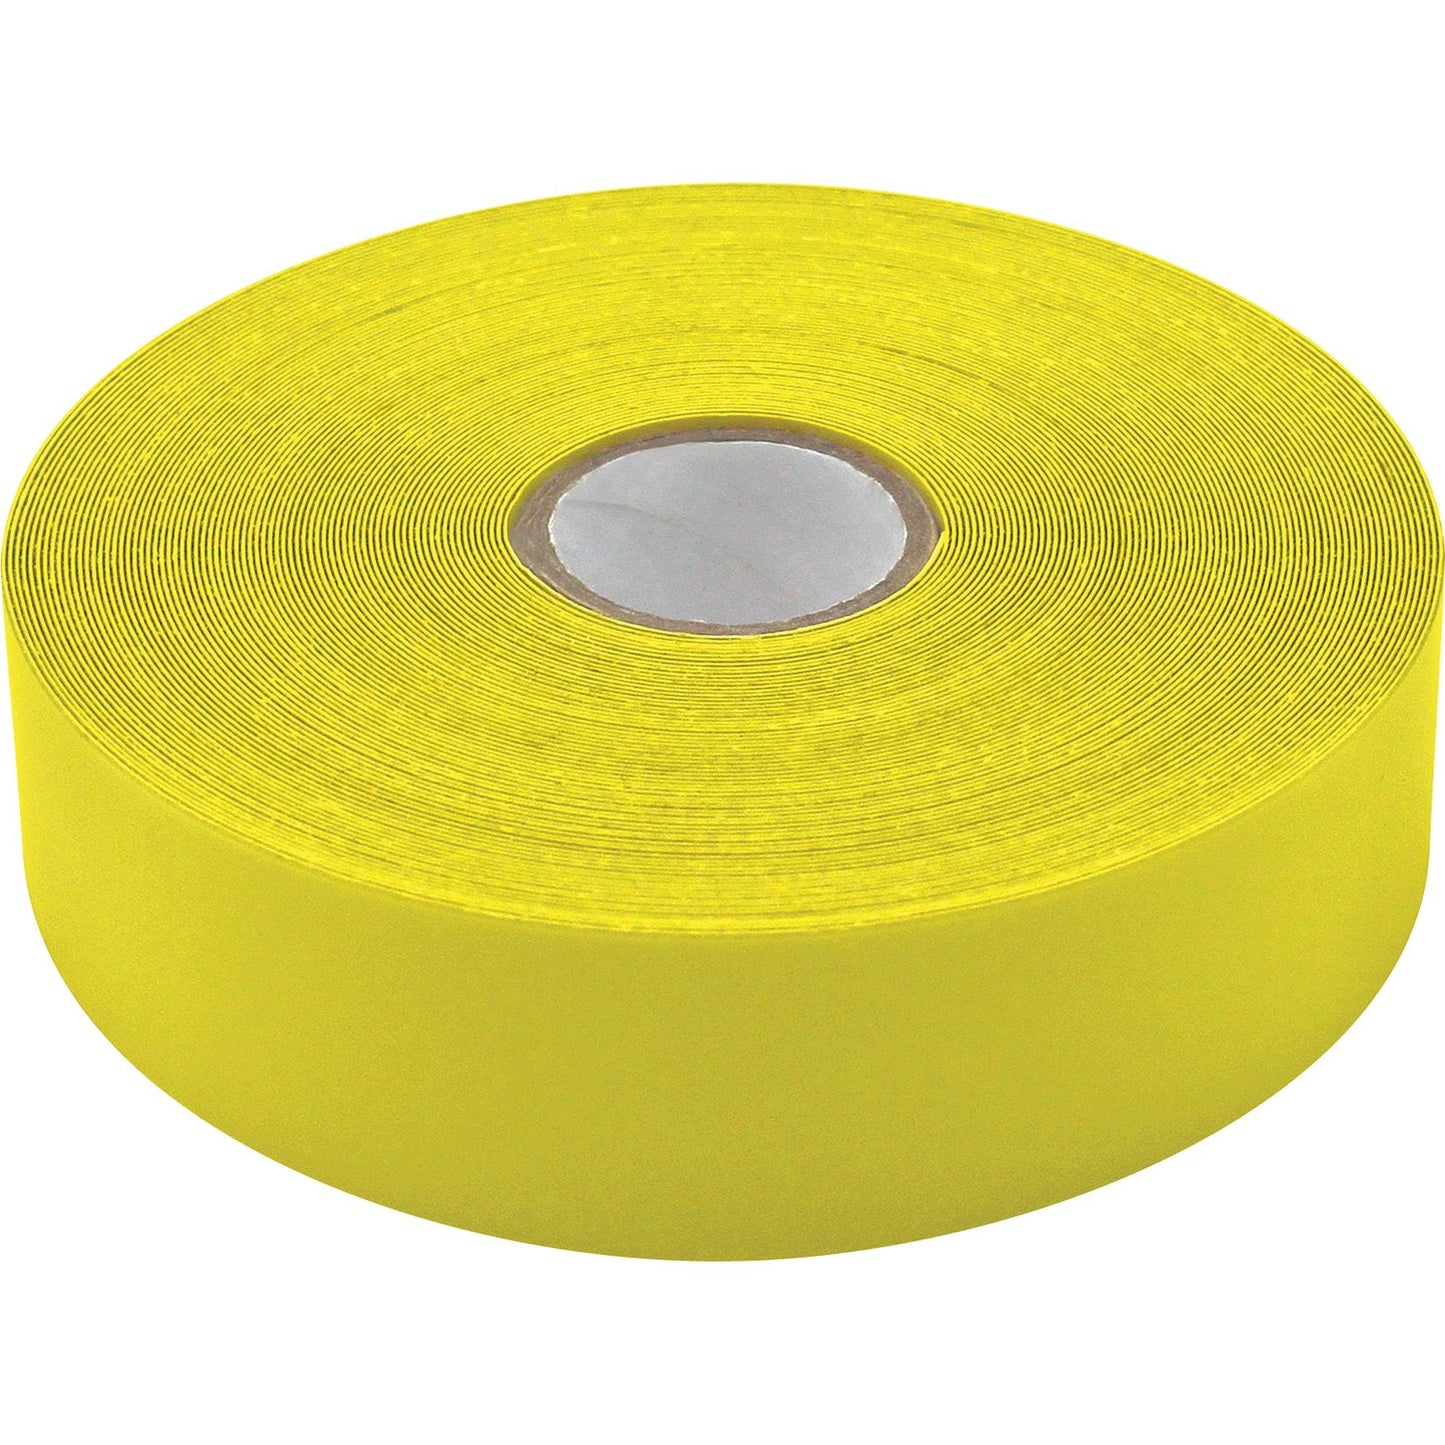 Spot On Floor Marker Yellow Strips, 1" x 50' Roll - Loomini